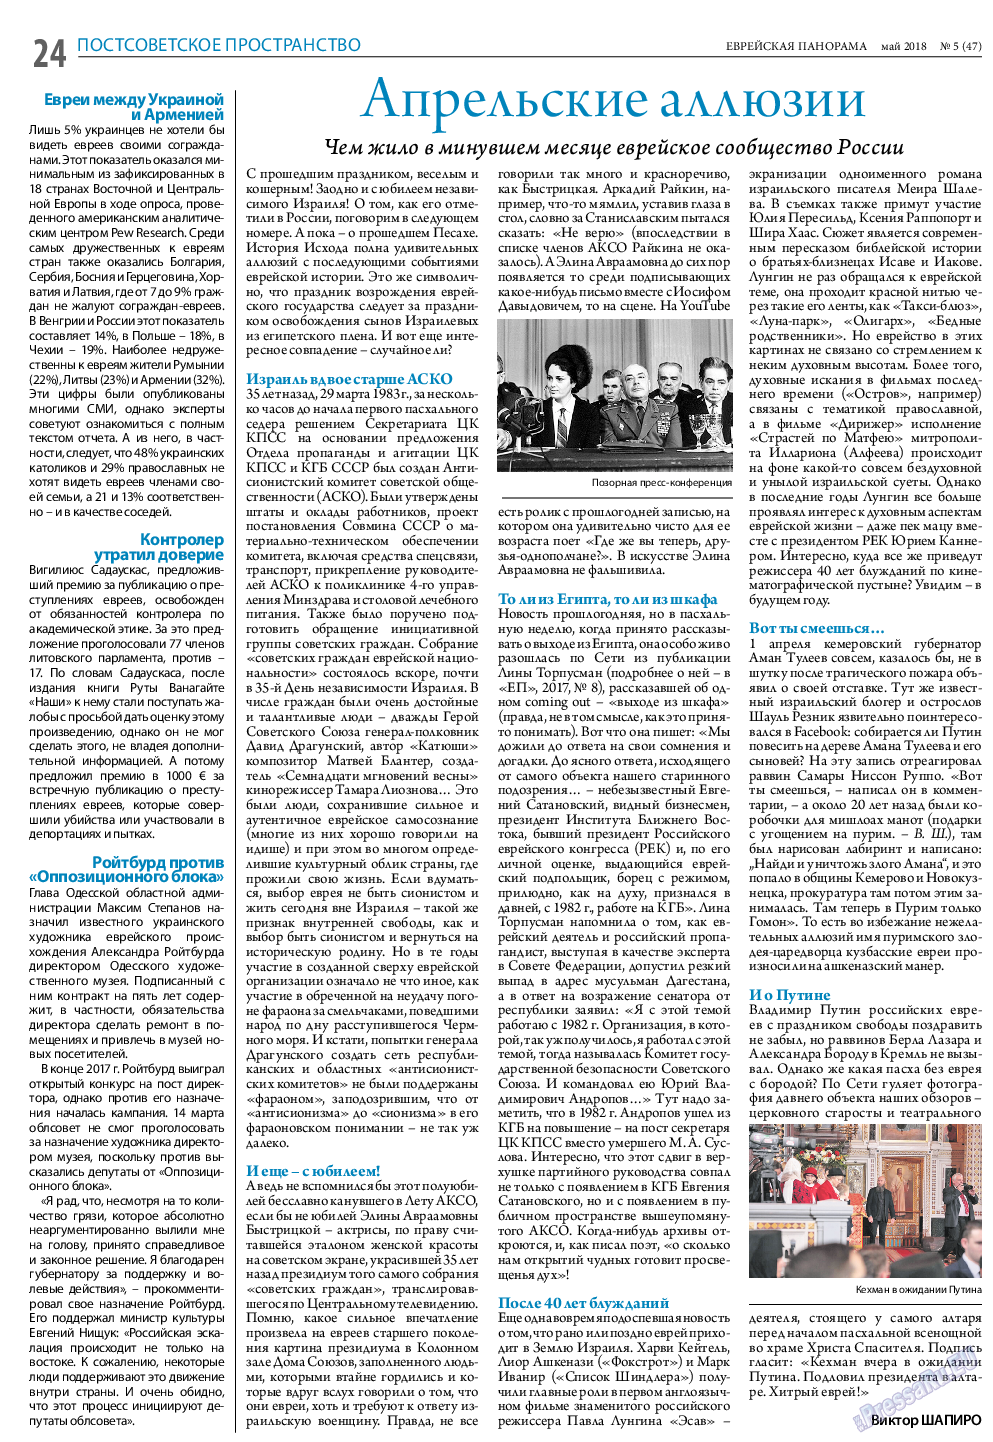 Еврейская панорама, газета. 2018 №5 стр.24